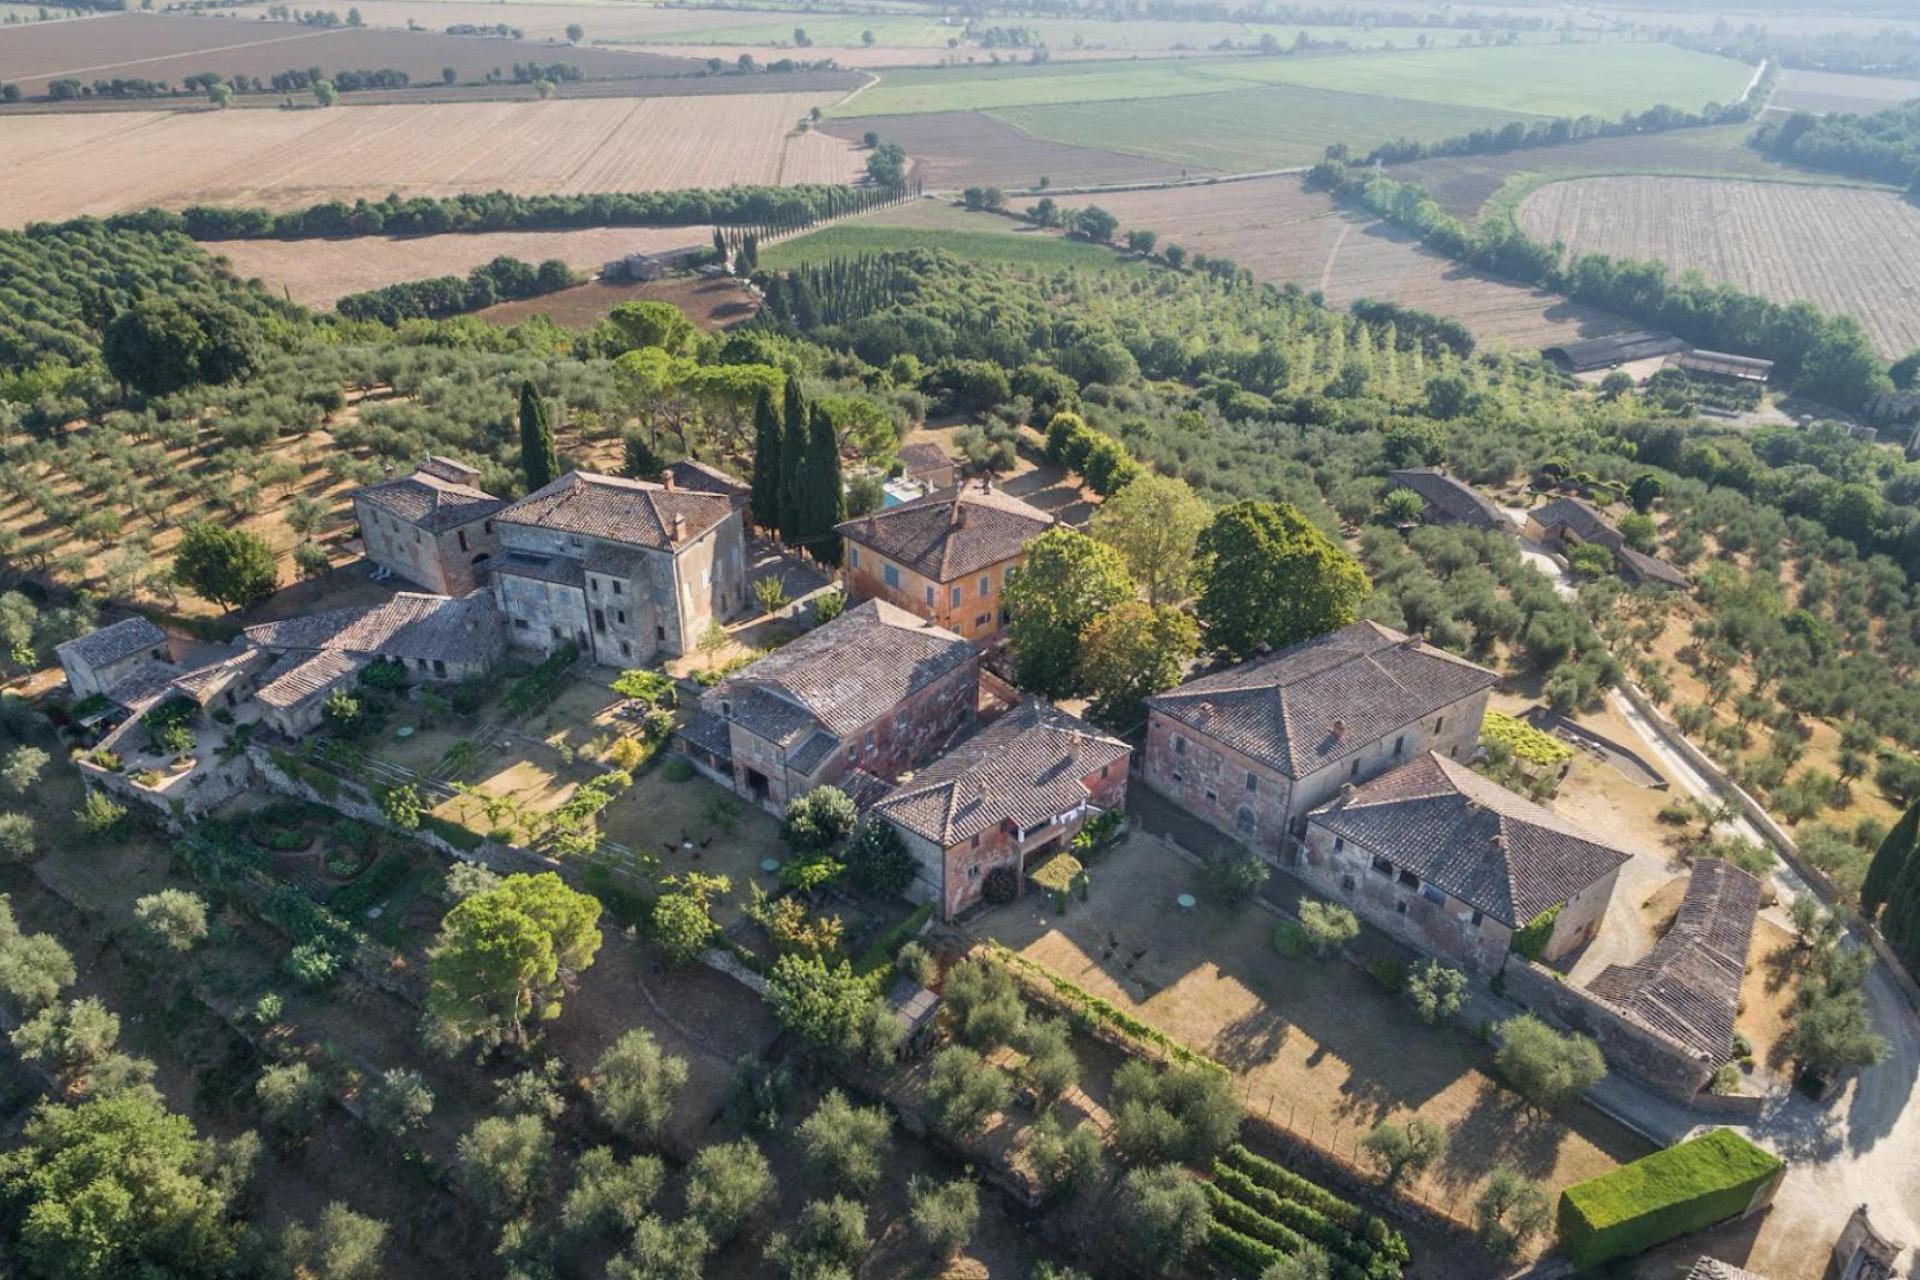 Agriturismo Toscana Perla nascosta in Toscana vicino a Siena